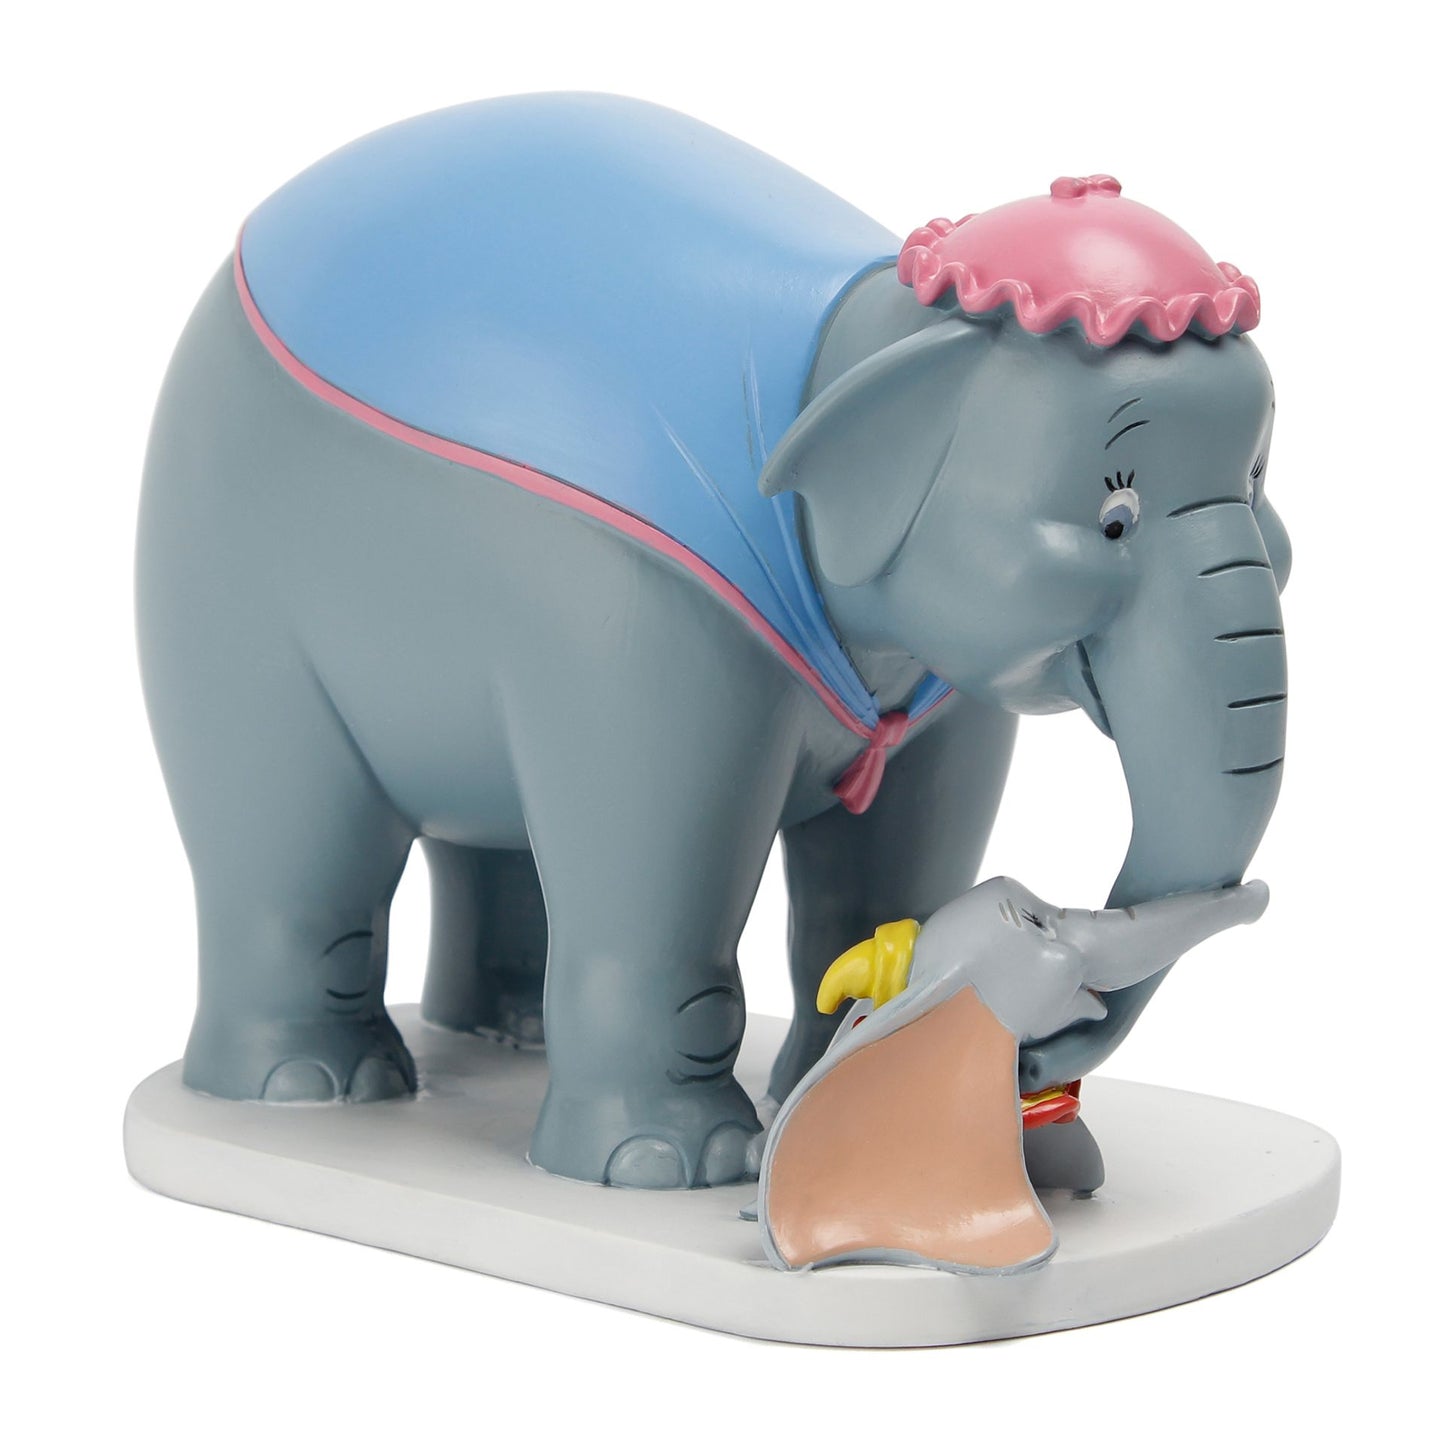 Disney Jumbo and Dumbo Figurine - 13 x 16 x 10 cm